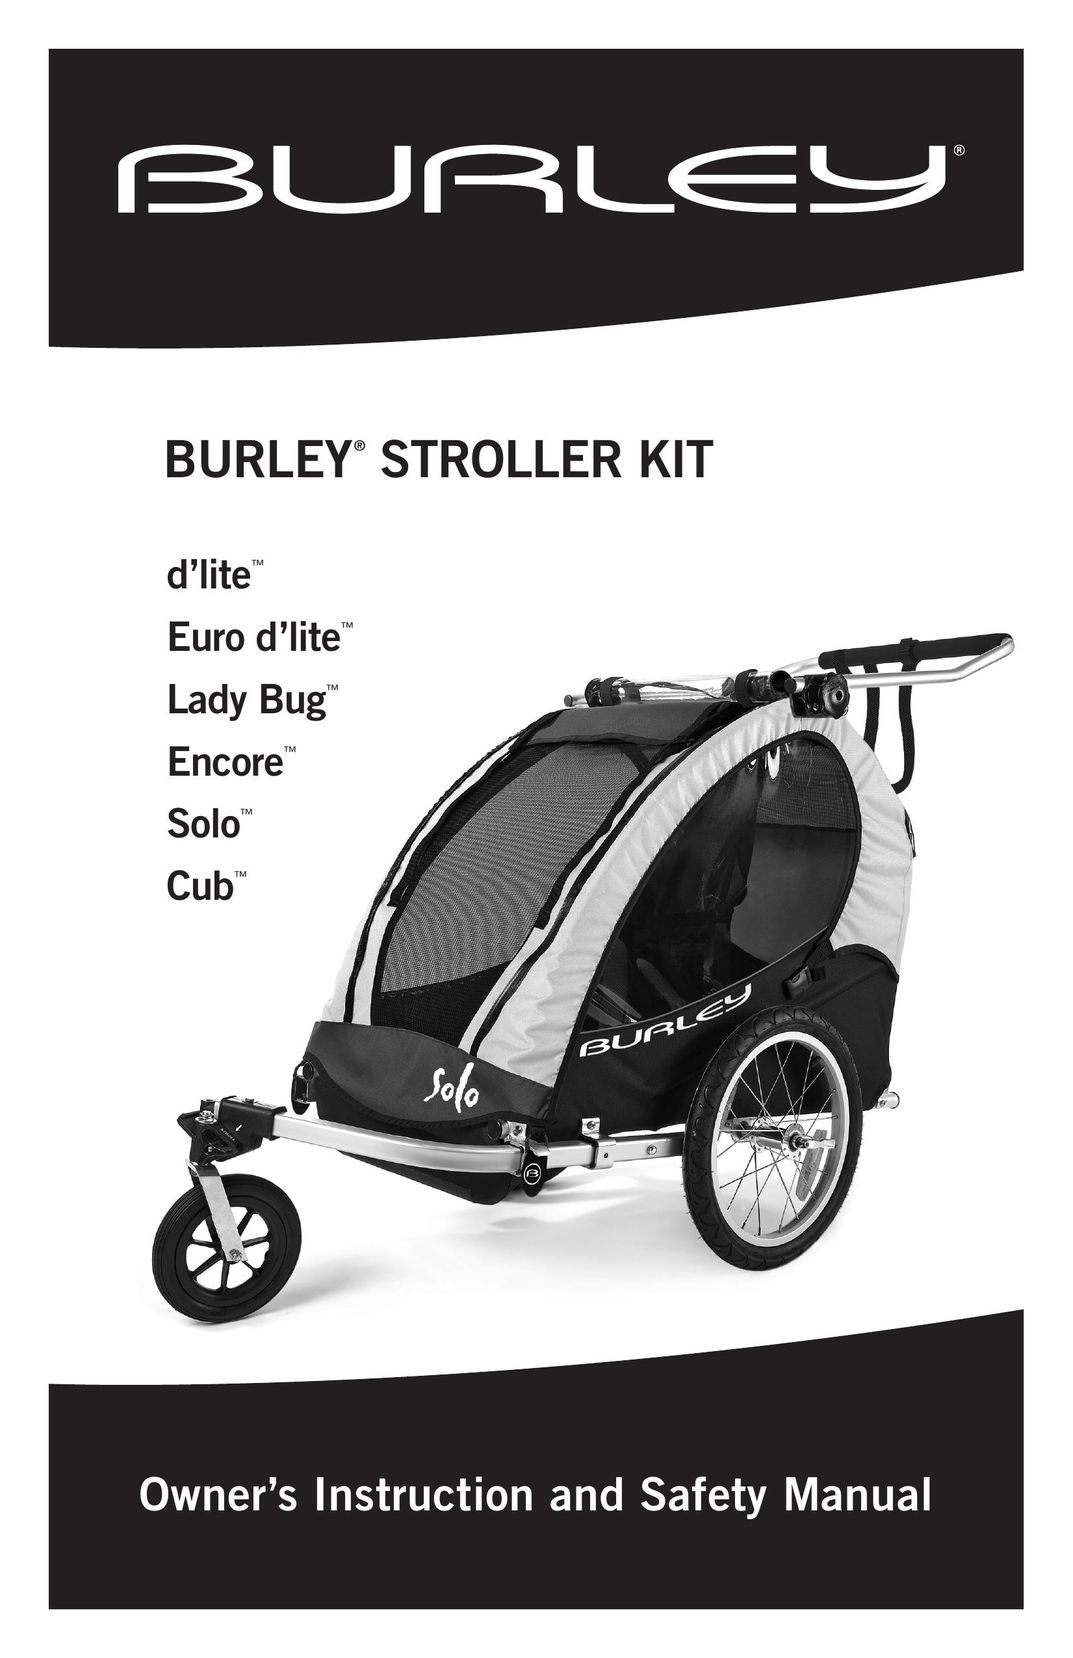 Burley d'lite Stroller User Manual (Page 1)